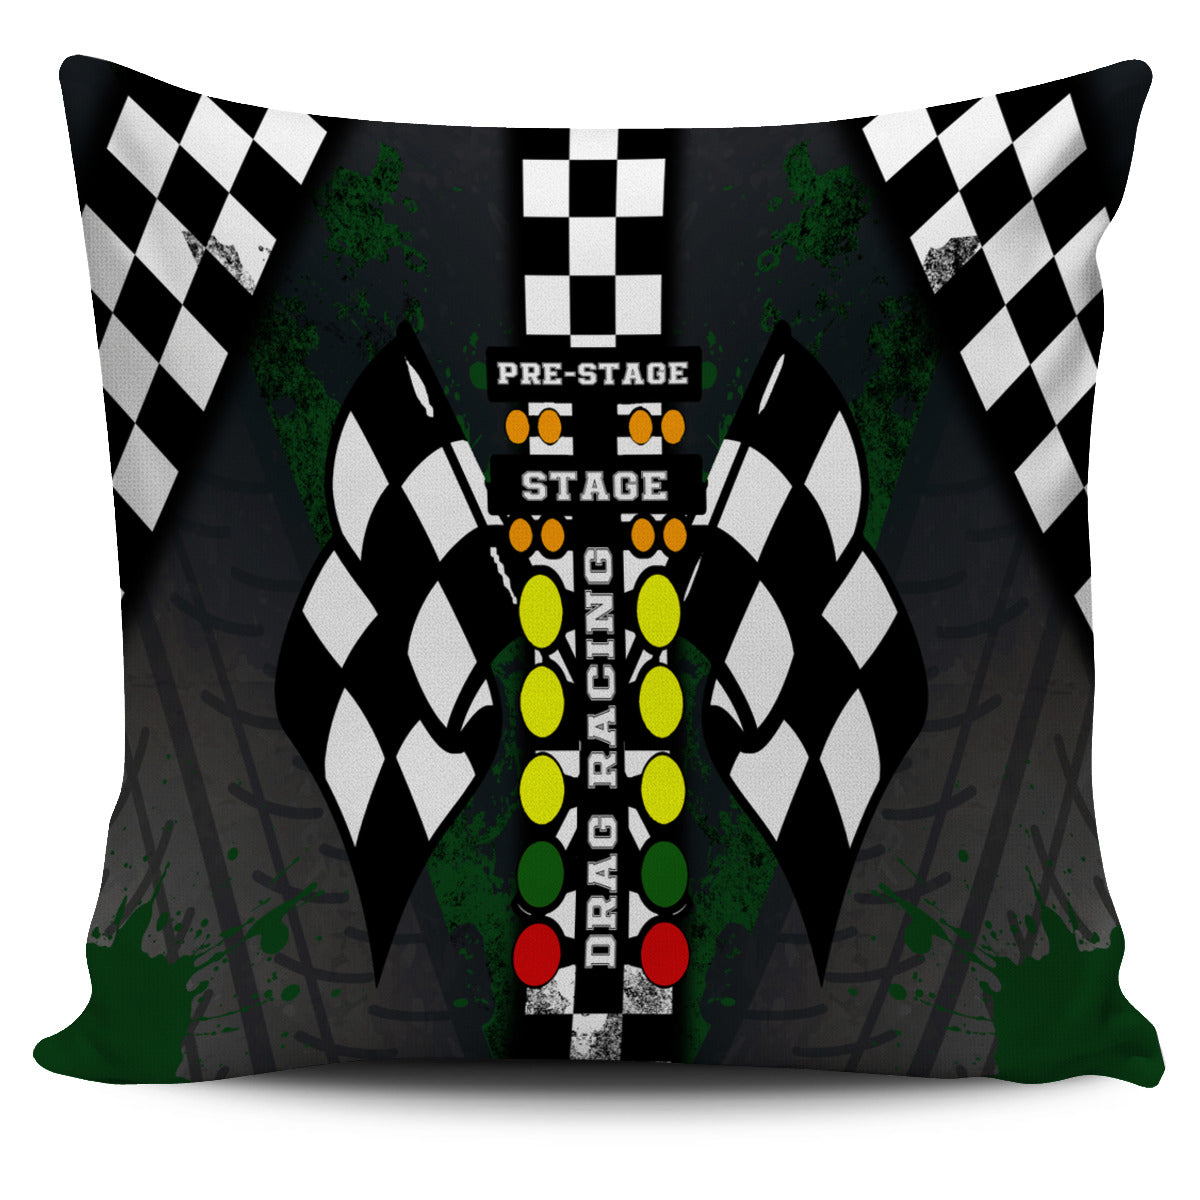 Drag Racing Pillow Covers Green